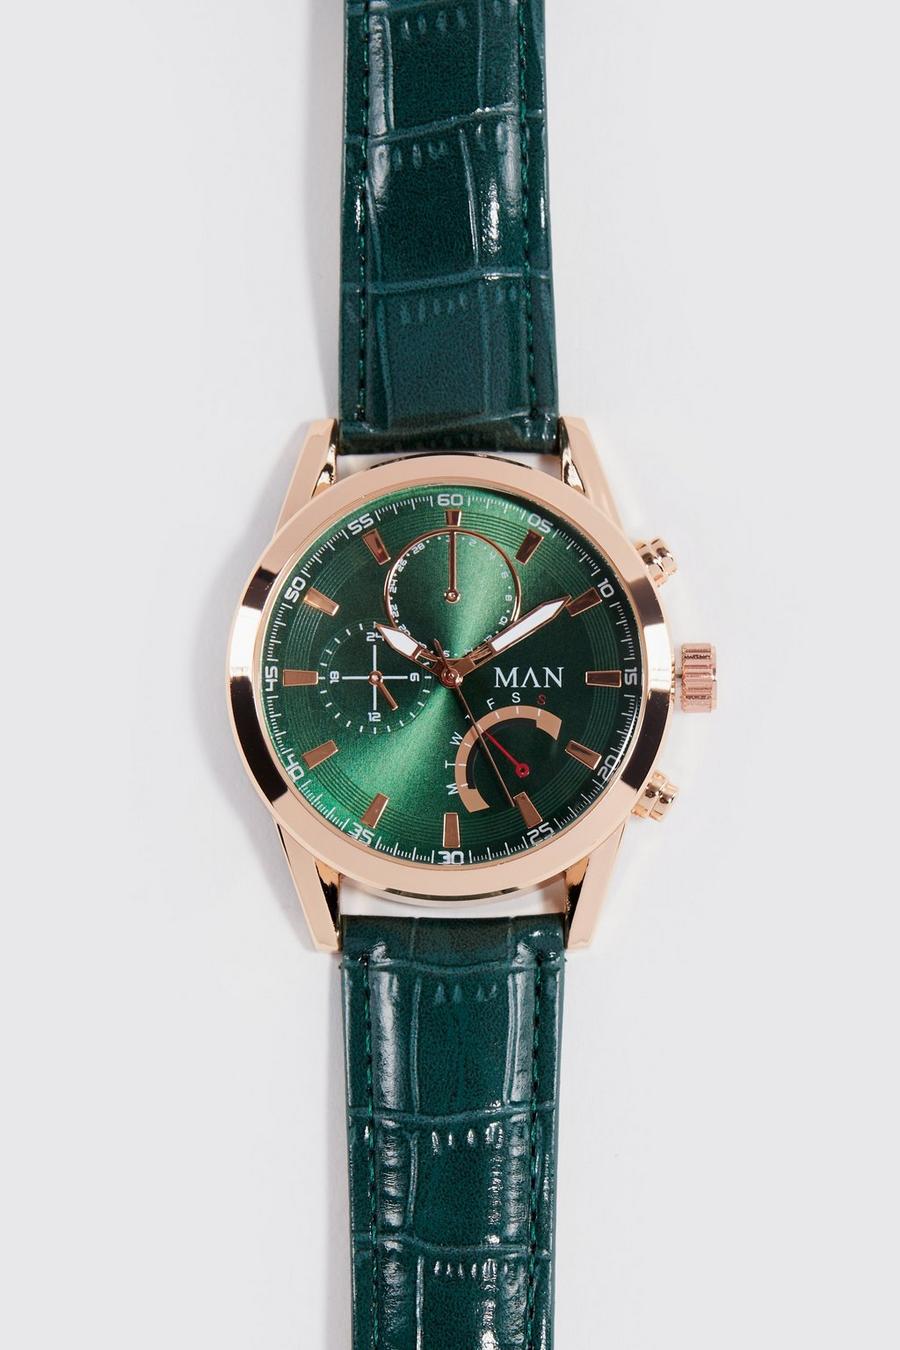 Reloj con firma MAN clásico en caja de regalo, Green verde